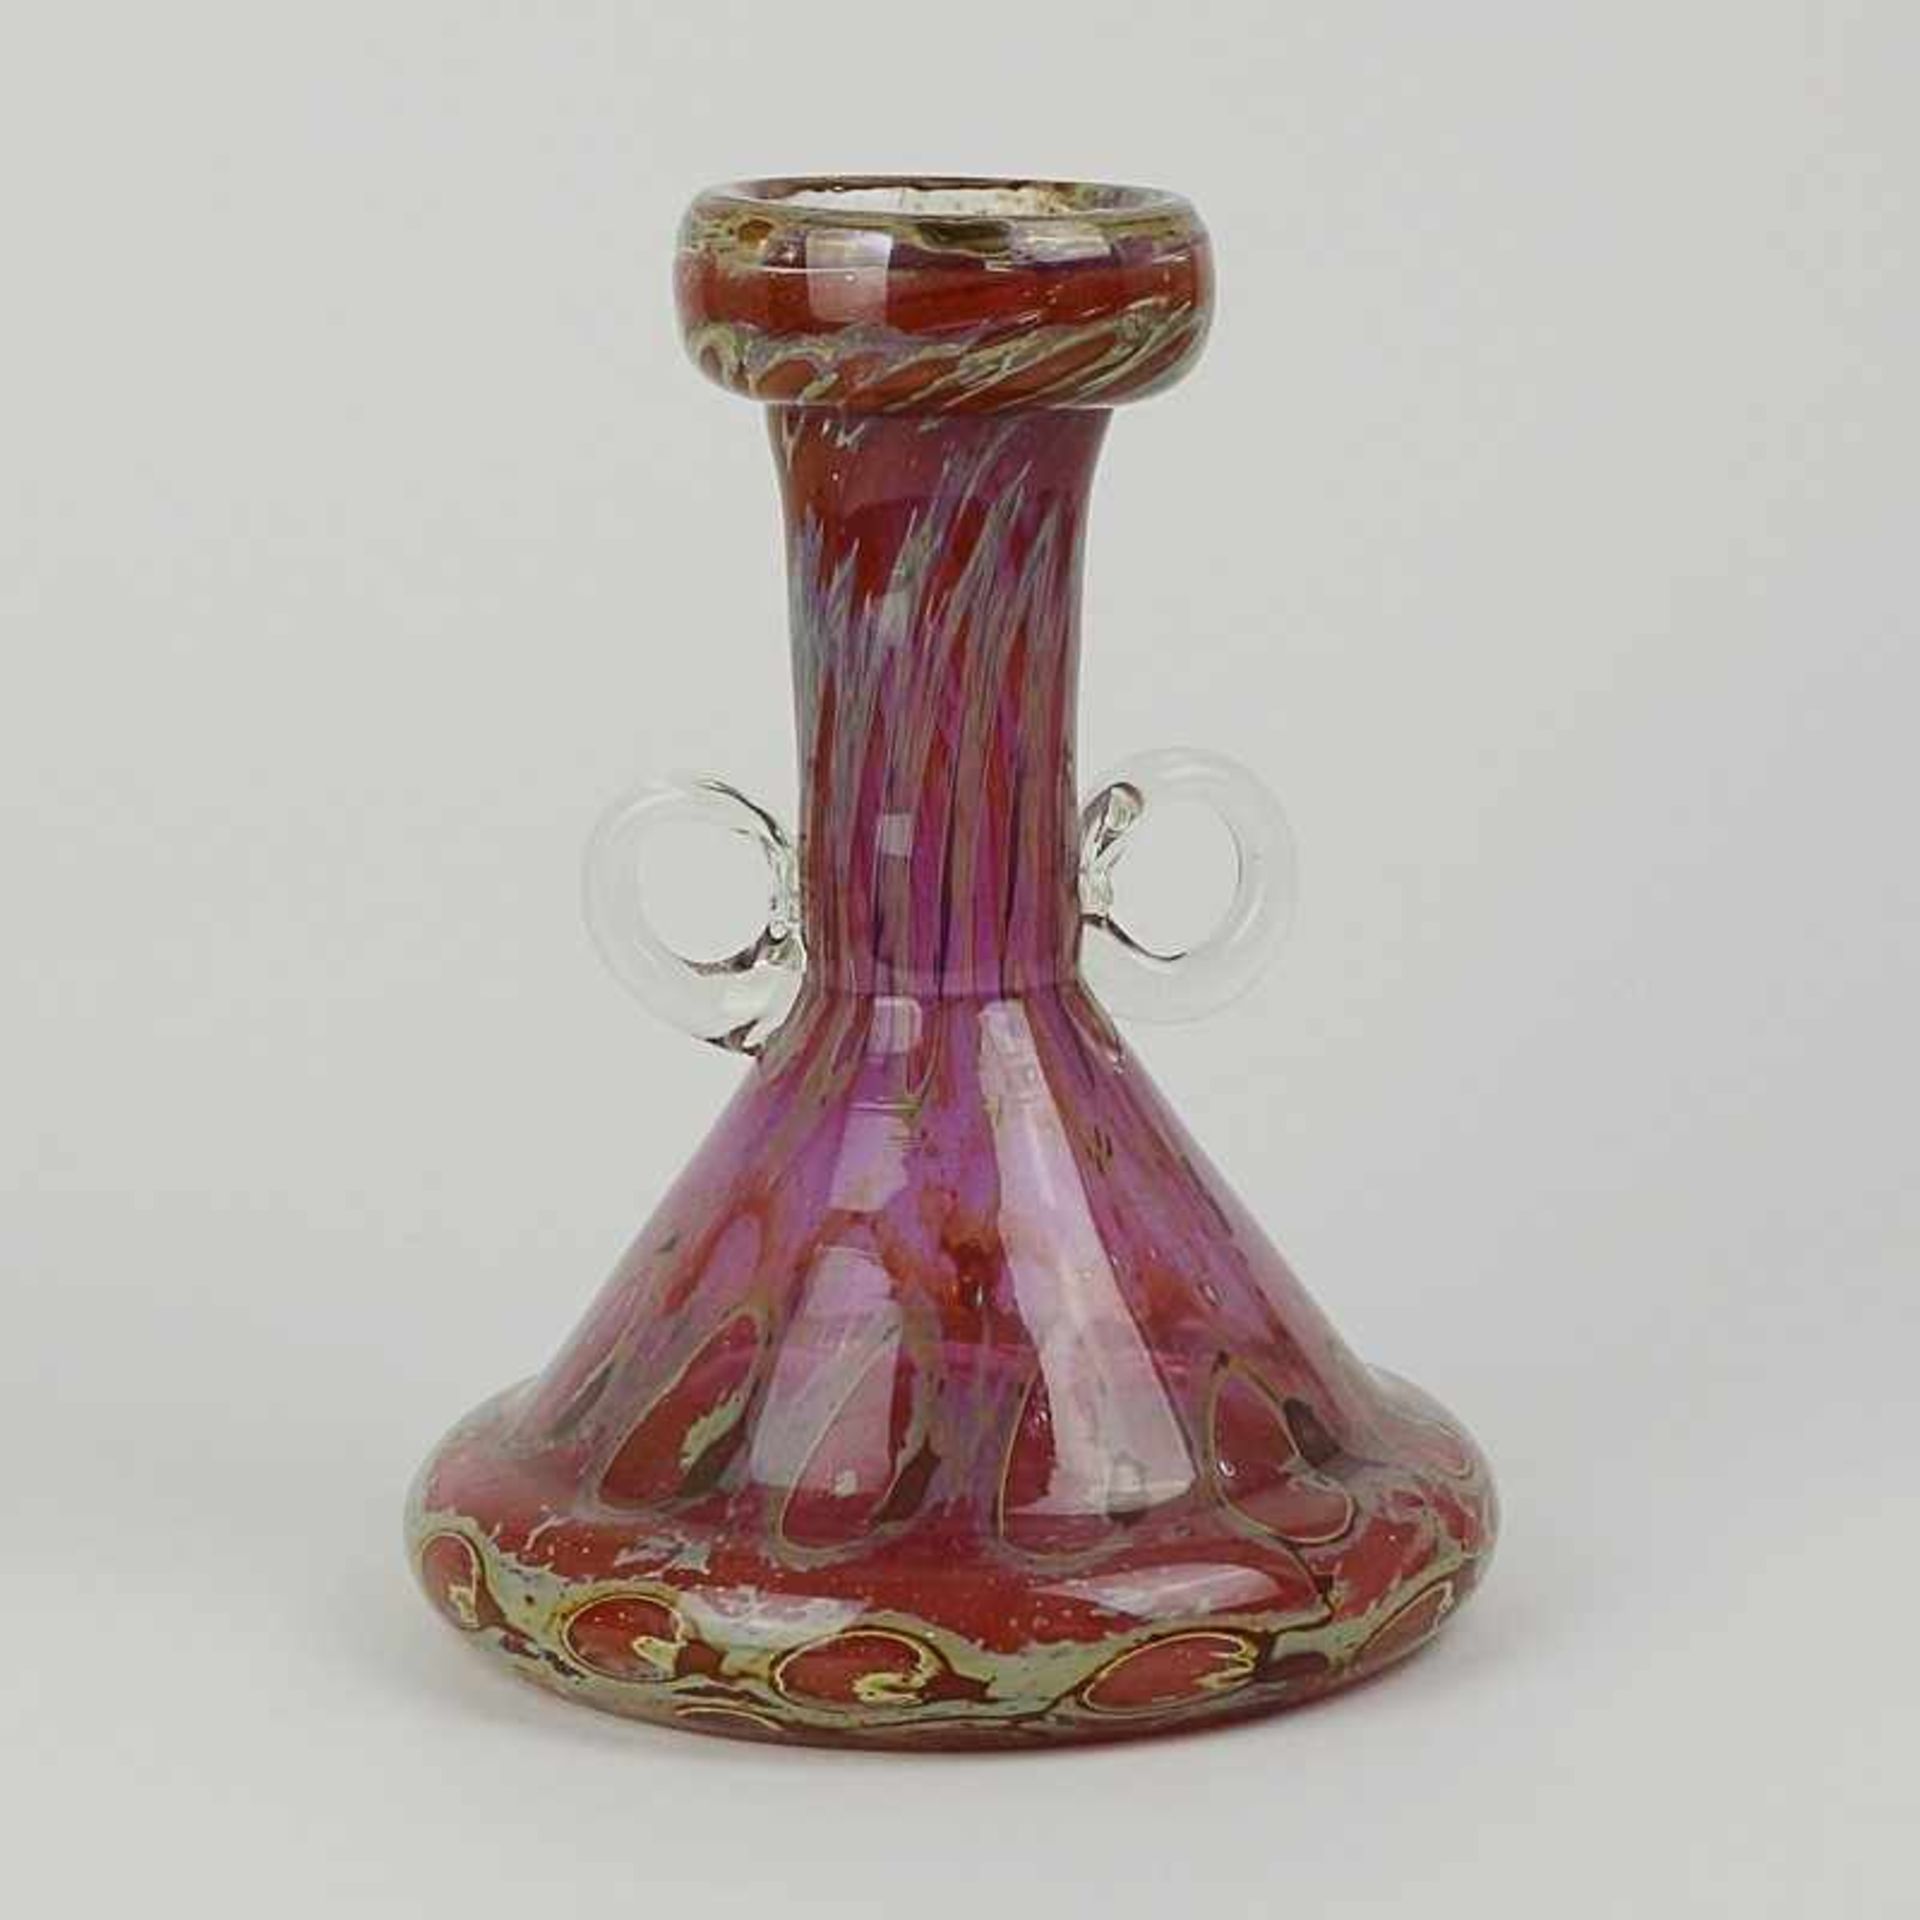 Eisch - VaseDekor 'Pfauenauge', farbloses dickw. Glas, runder Stand, kegelförmiger Korpus, langer